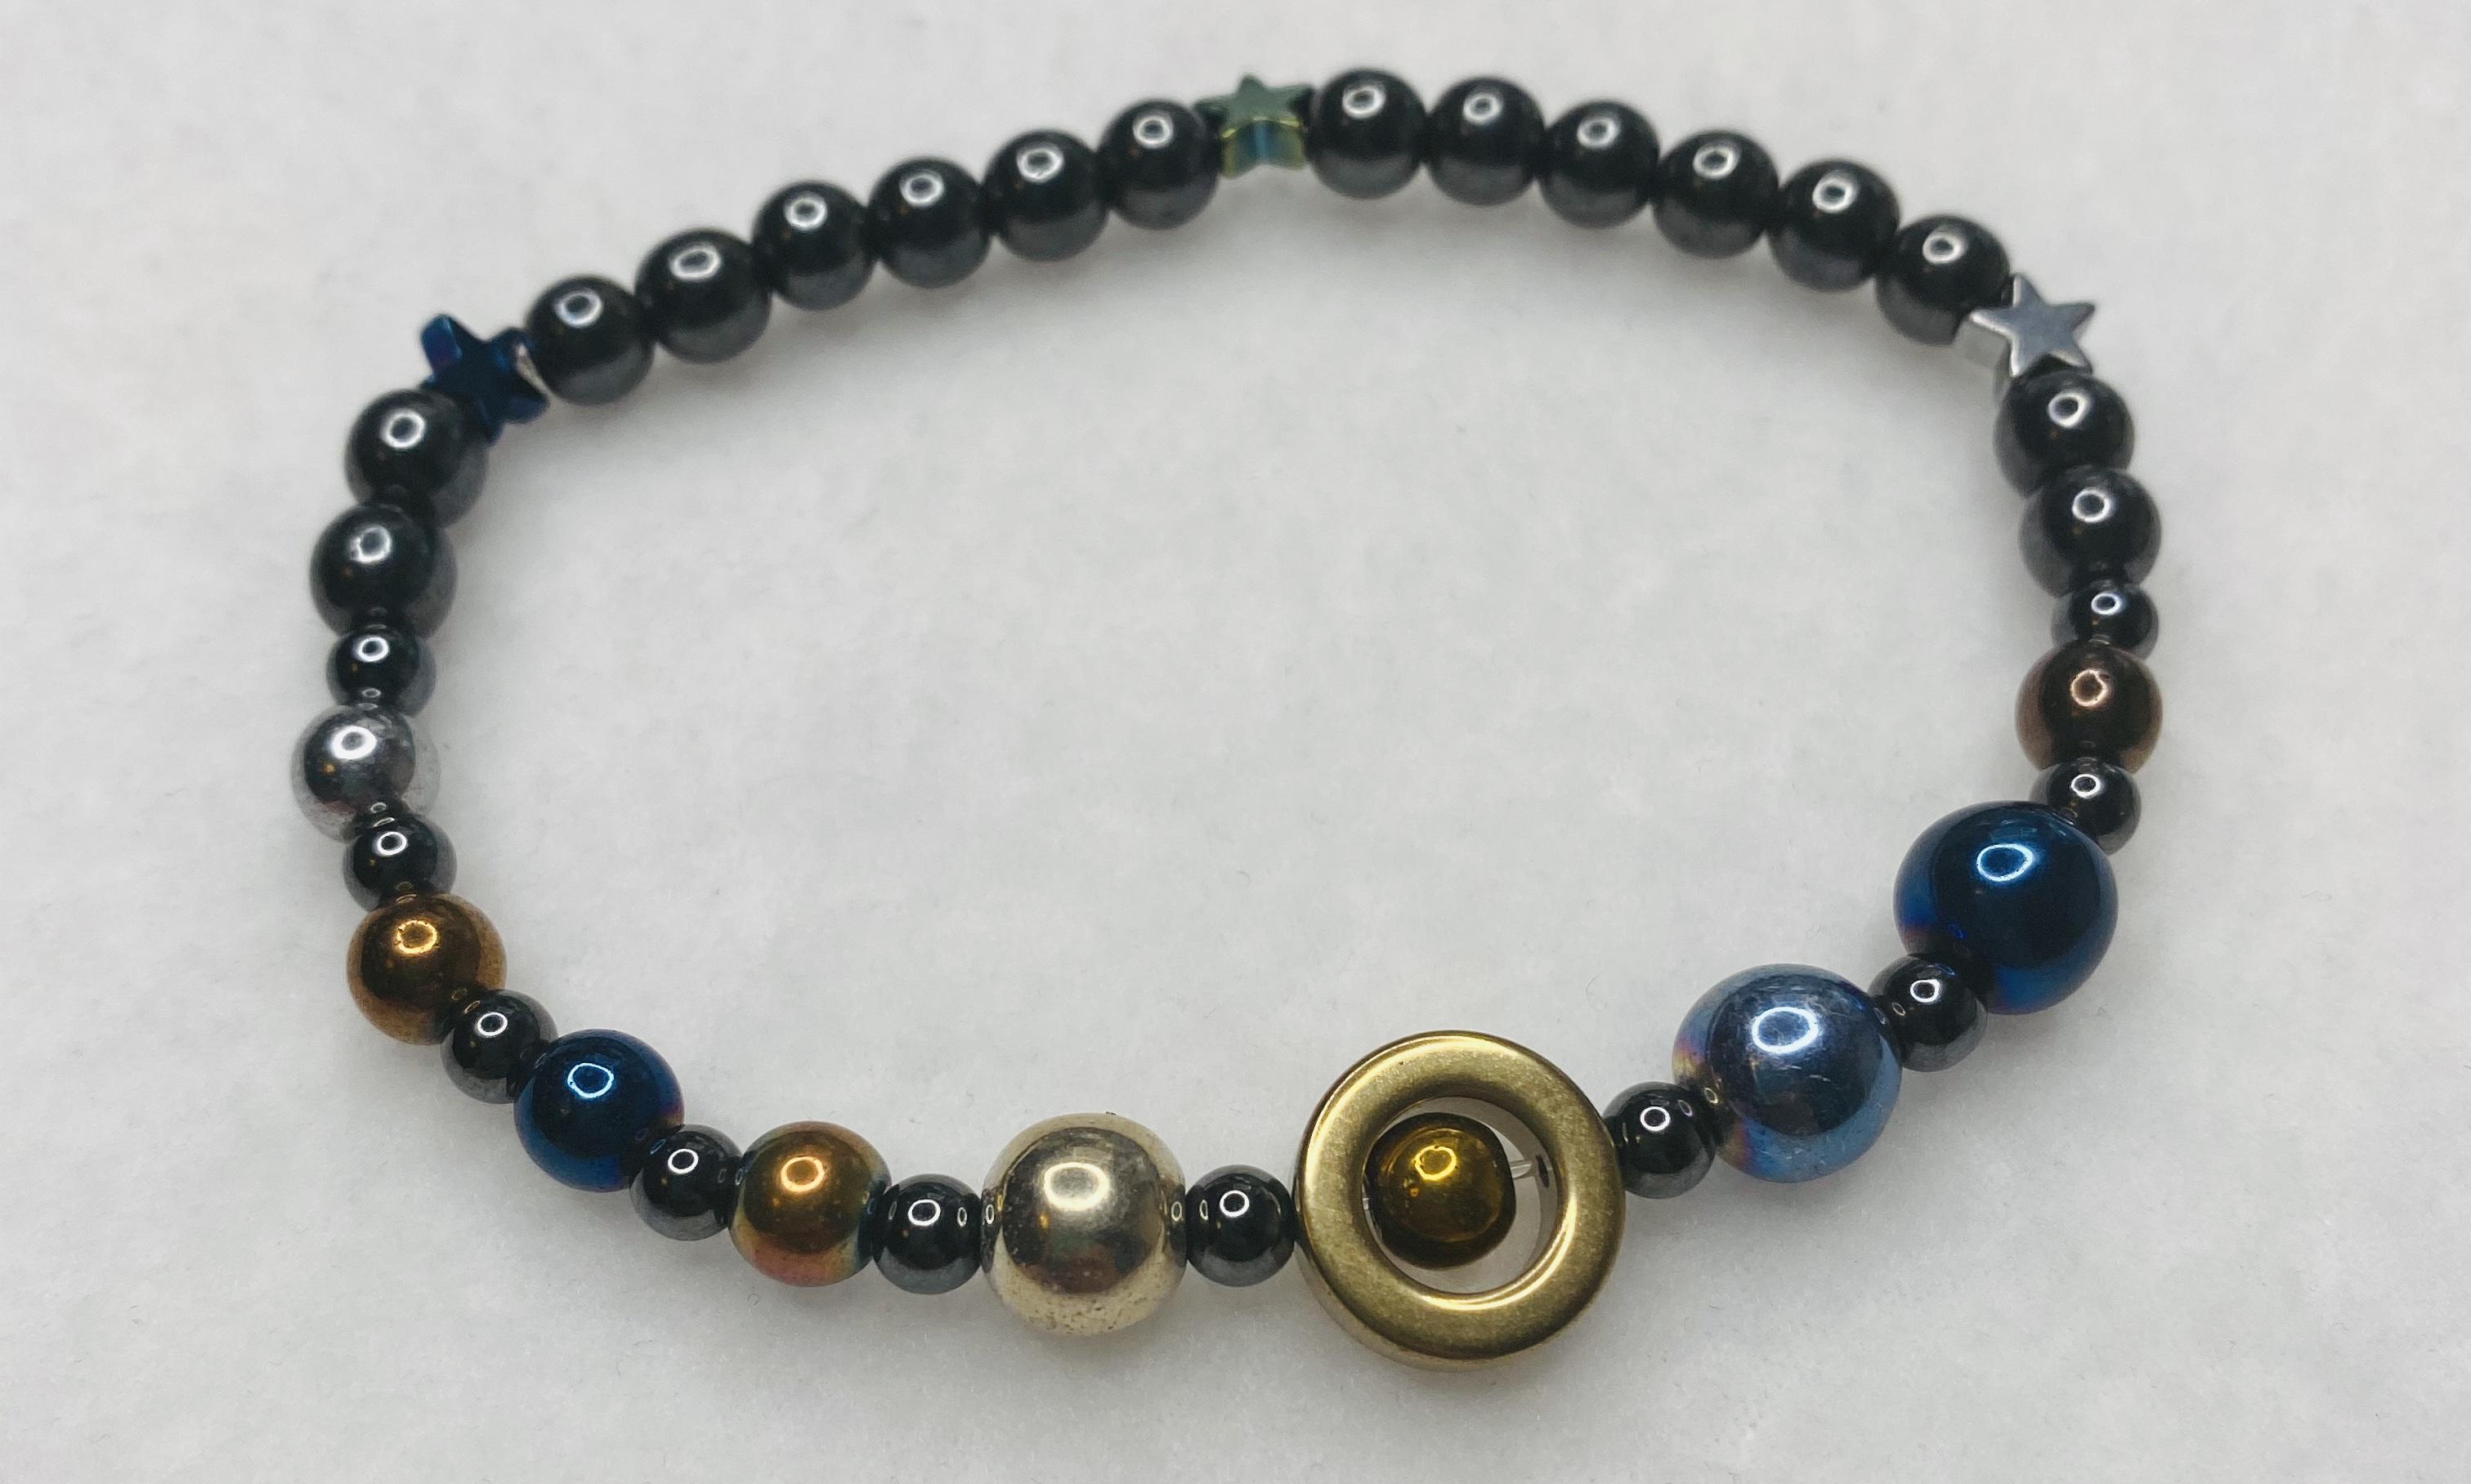 Galaxy Hematite Bracelet Kit - Makes 5